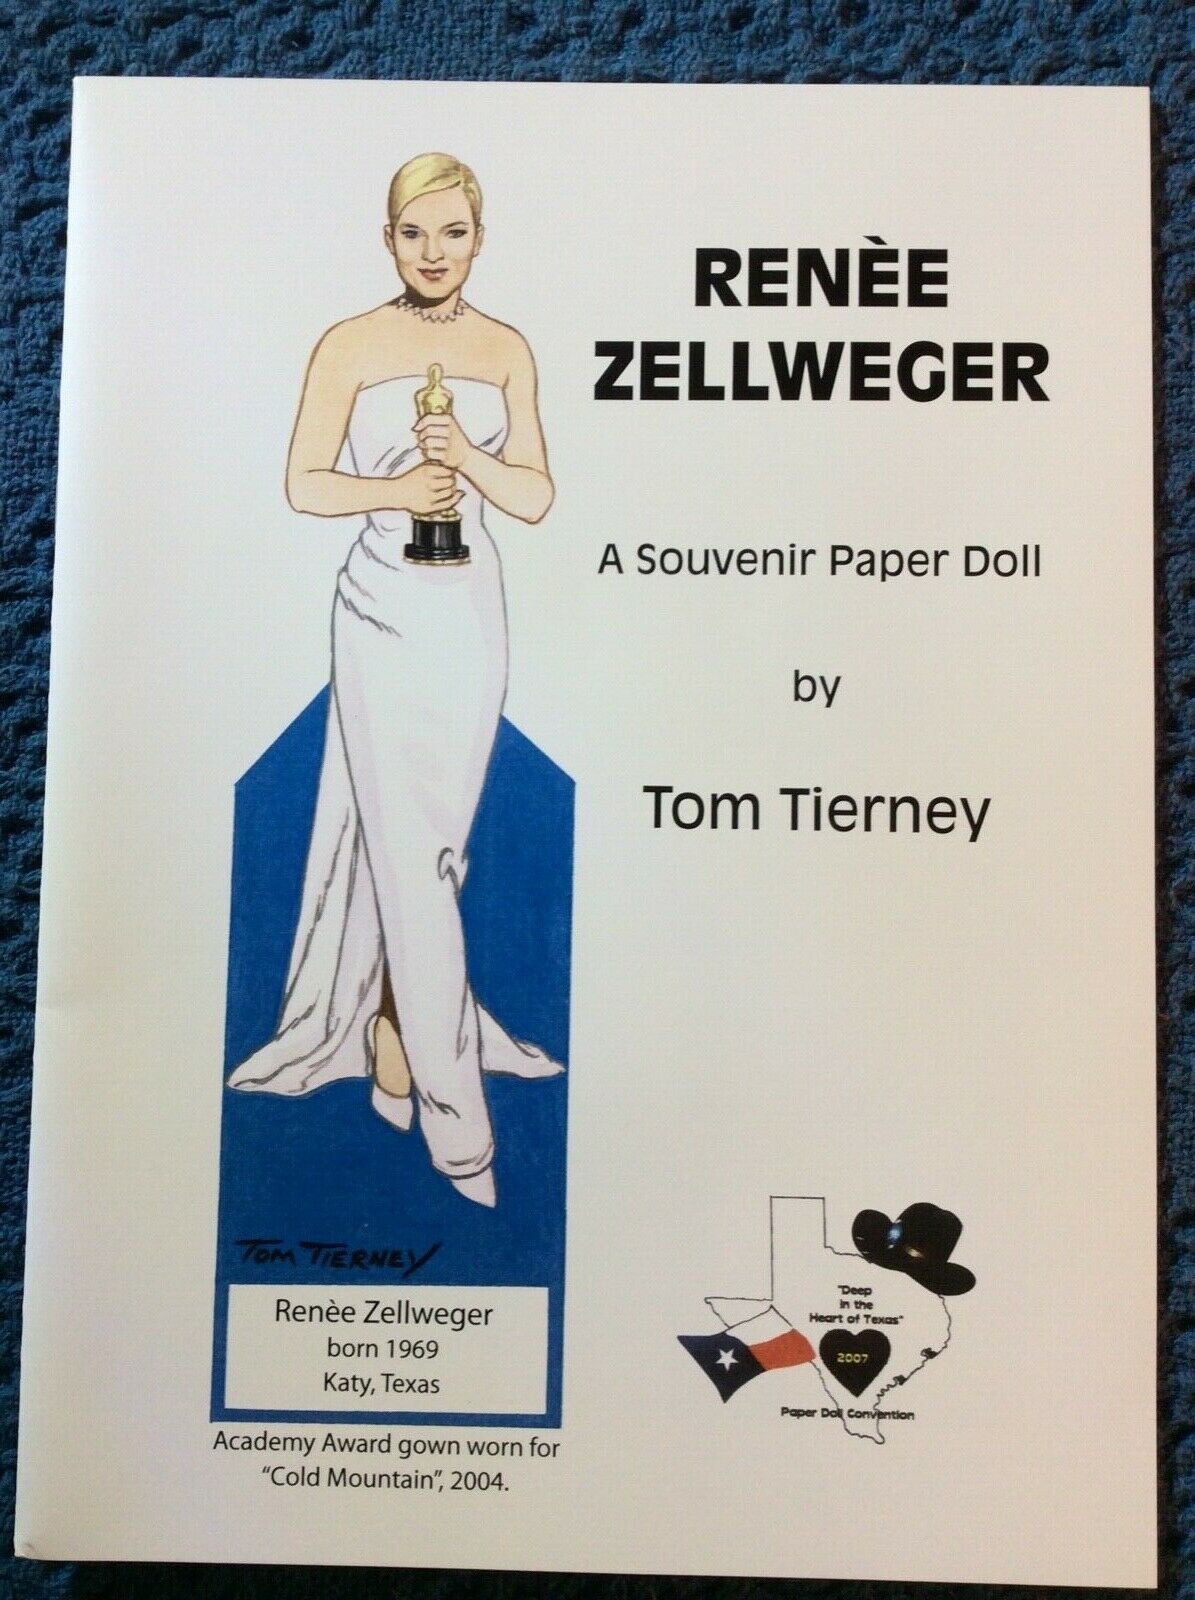 Paper Doll Convention 2007 Souvenir Renee Zellweger And Carol Burnett